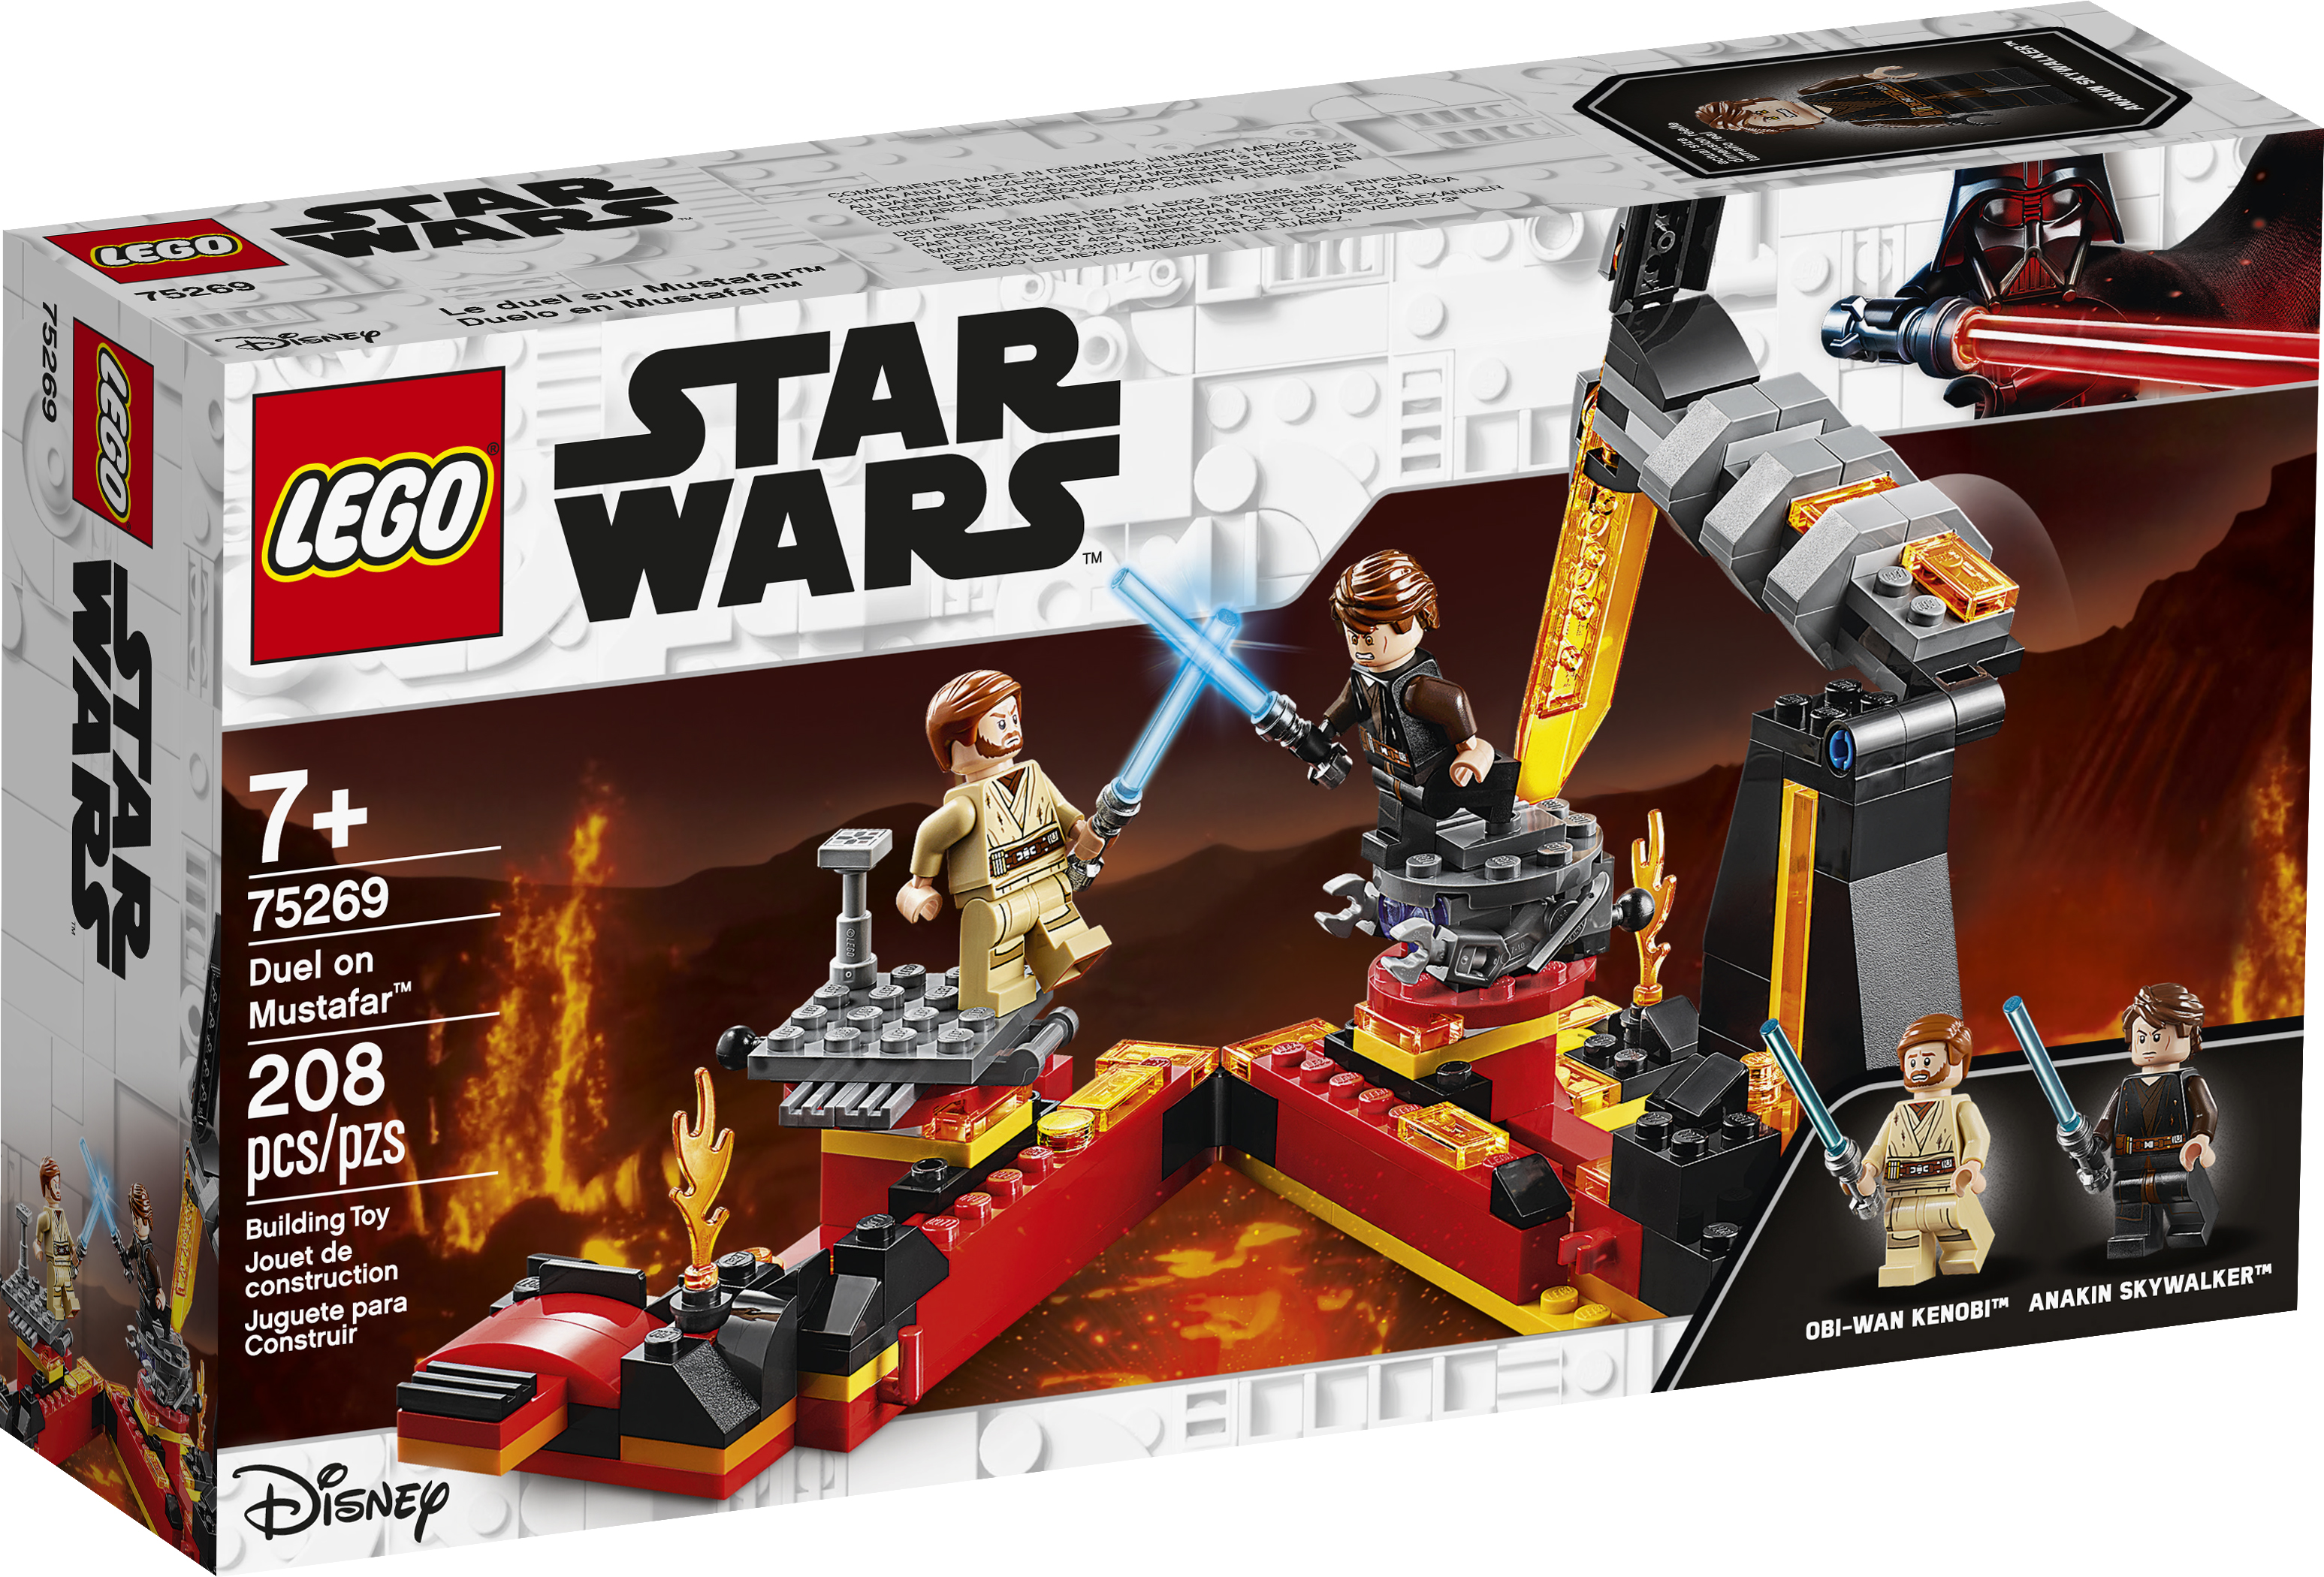 ROTS Anakin Skywalker vs. Obi-Wan Lego Set 1